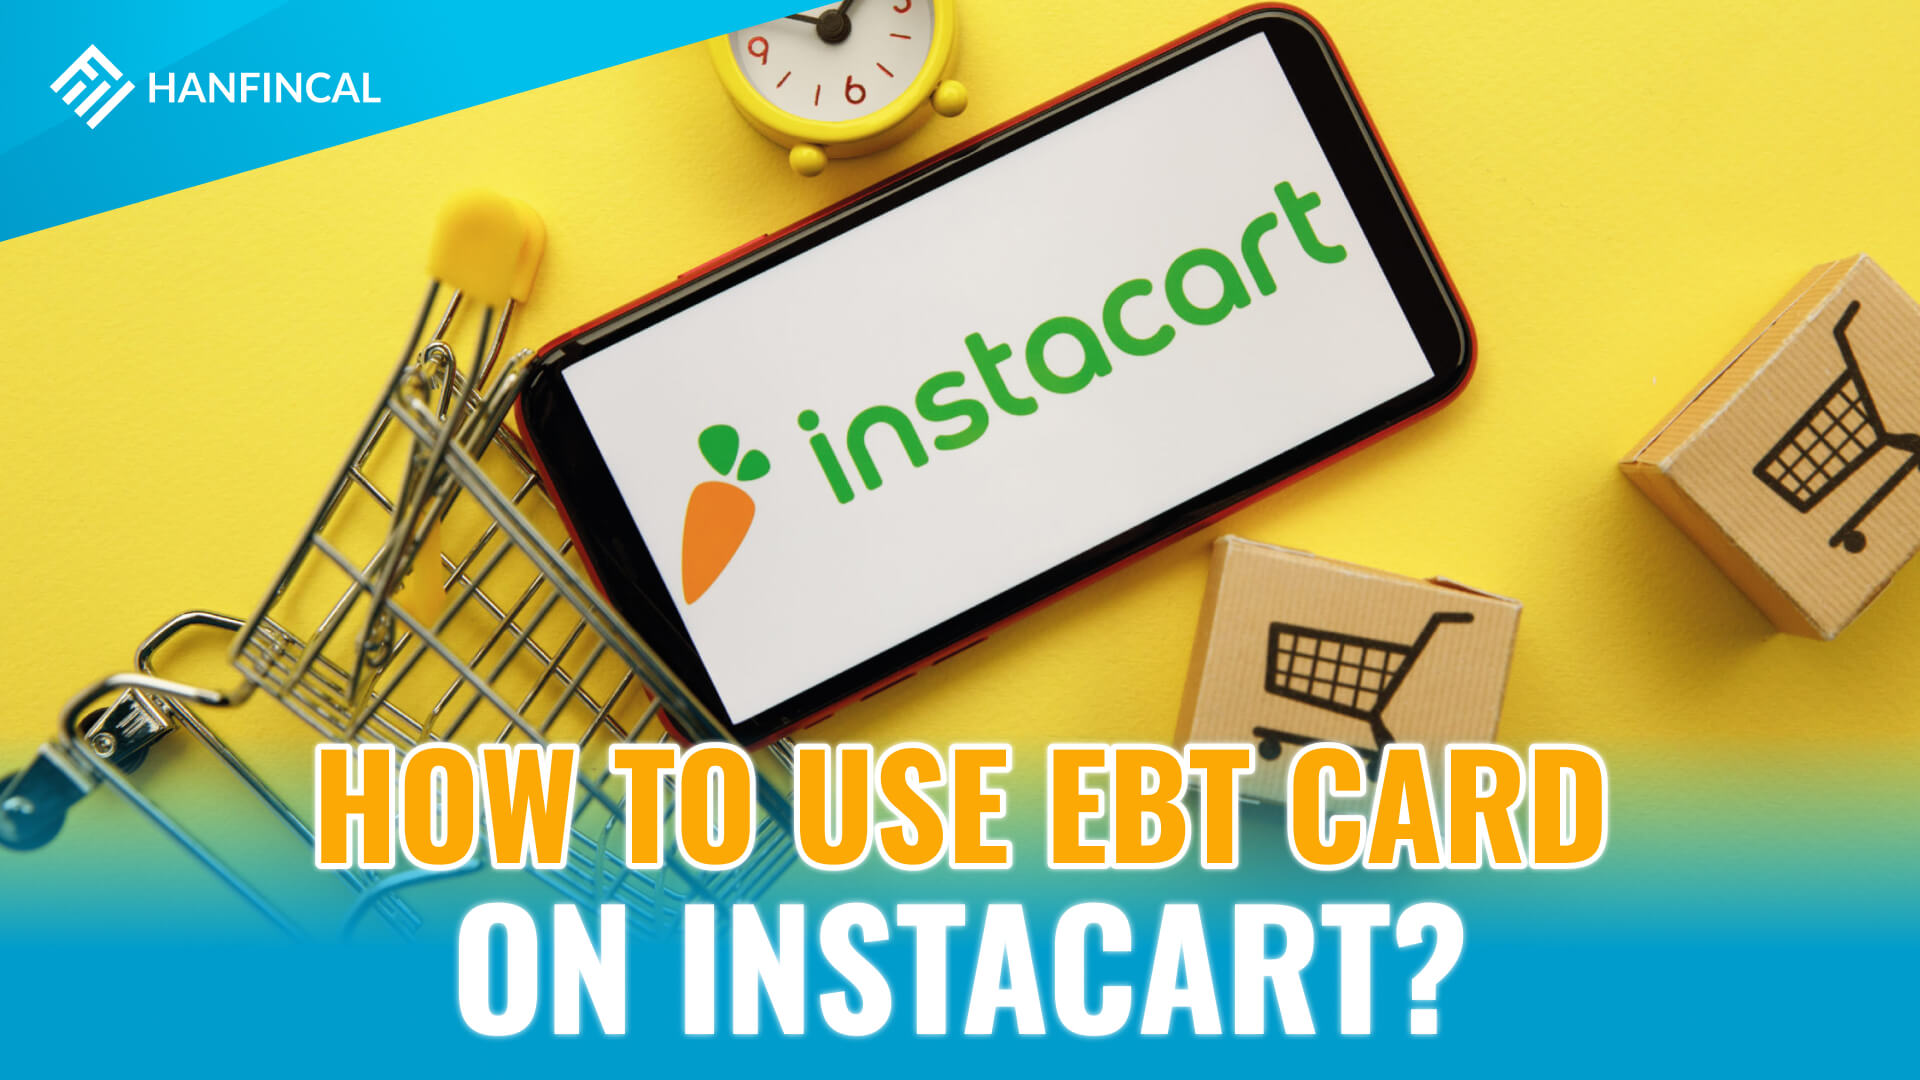 How to use an EBT card on Instacart?